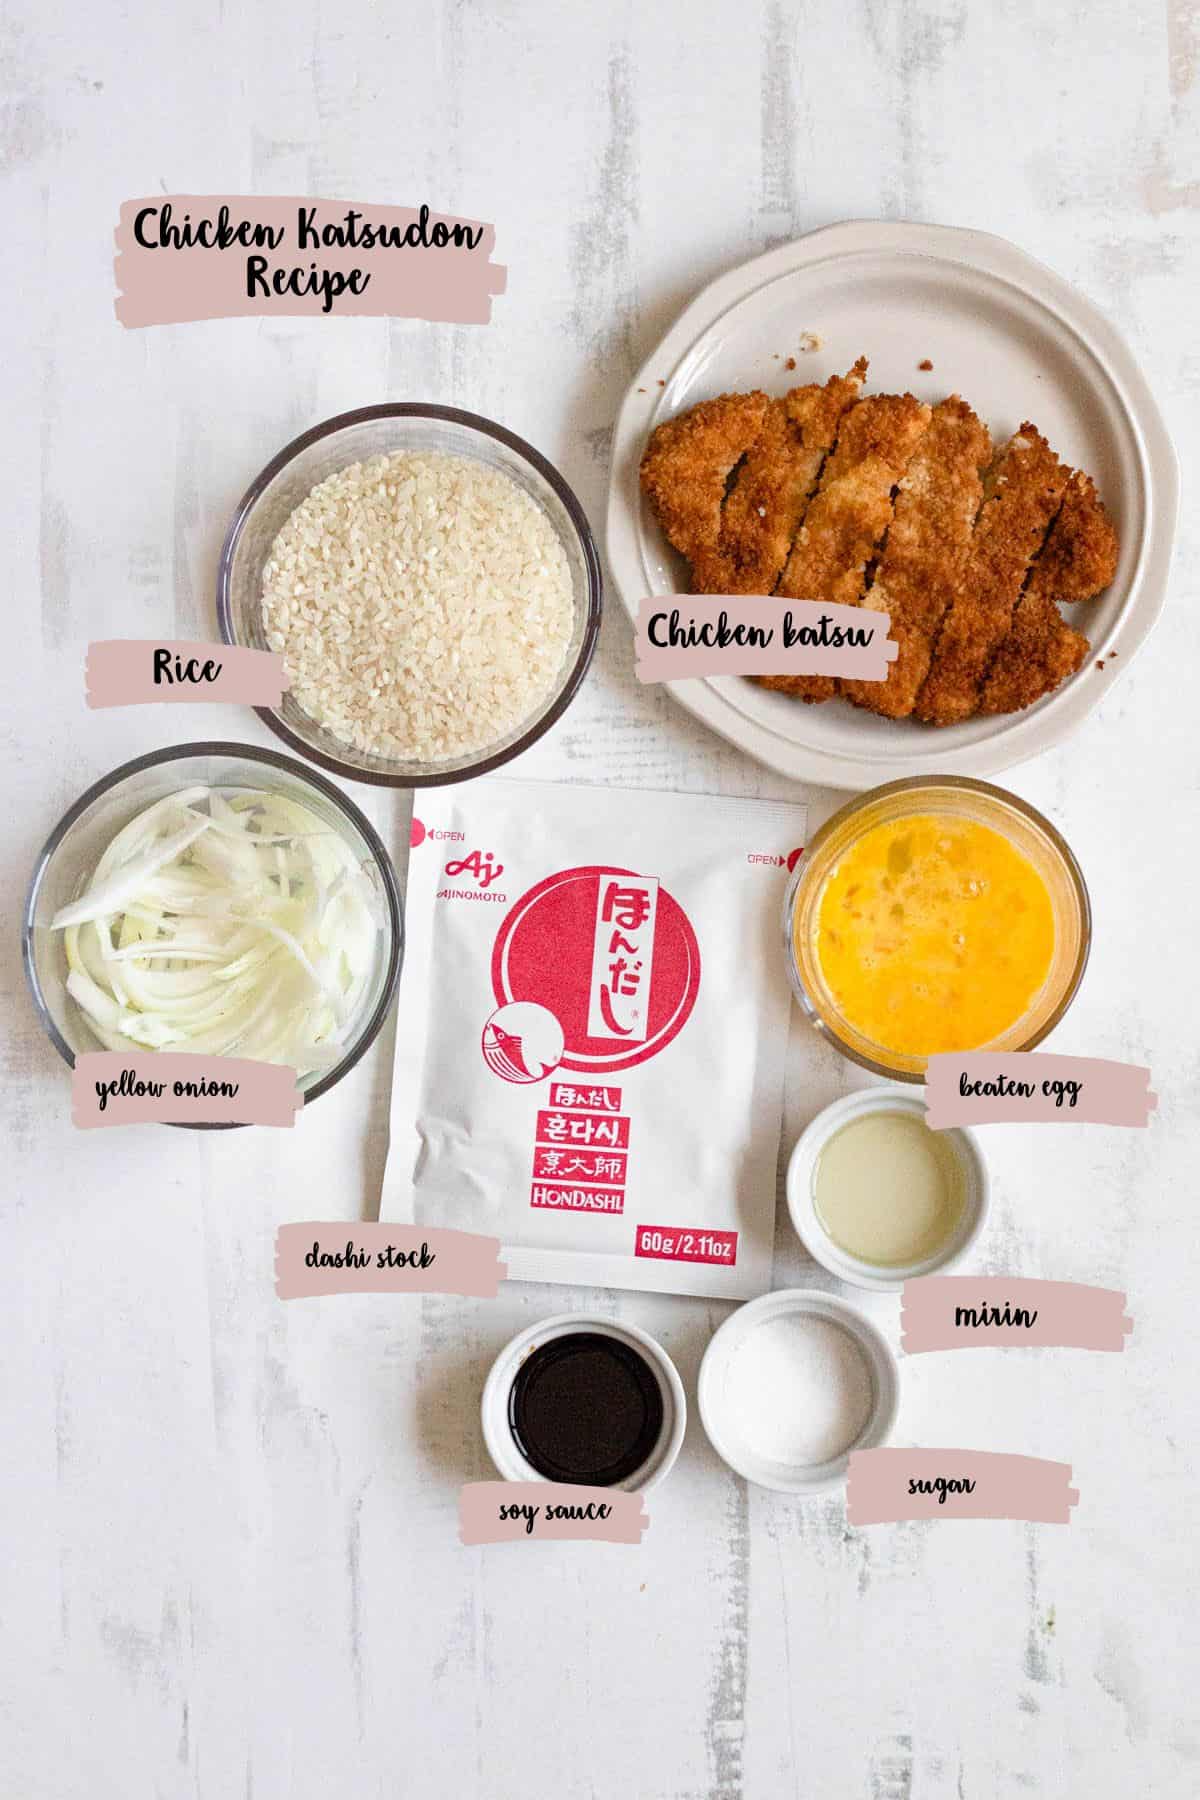 Ingredients shown are used to prepare Chicken katsudon recipe. 